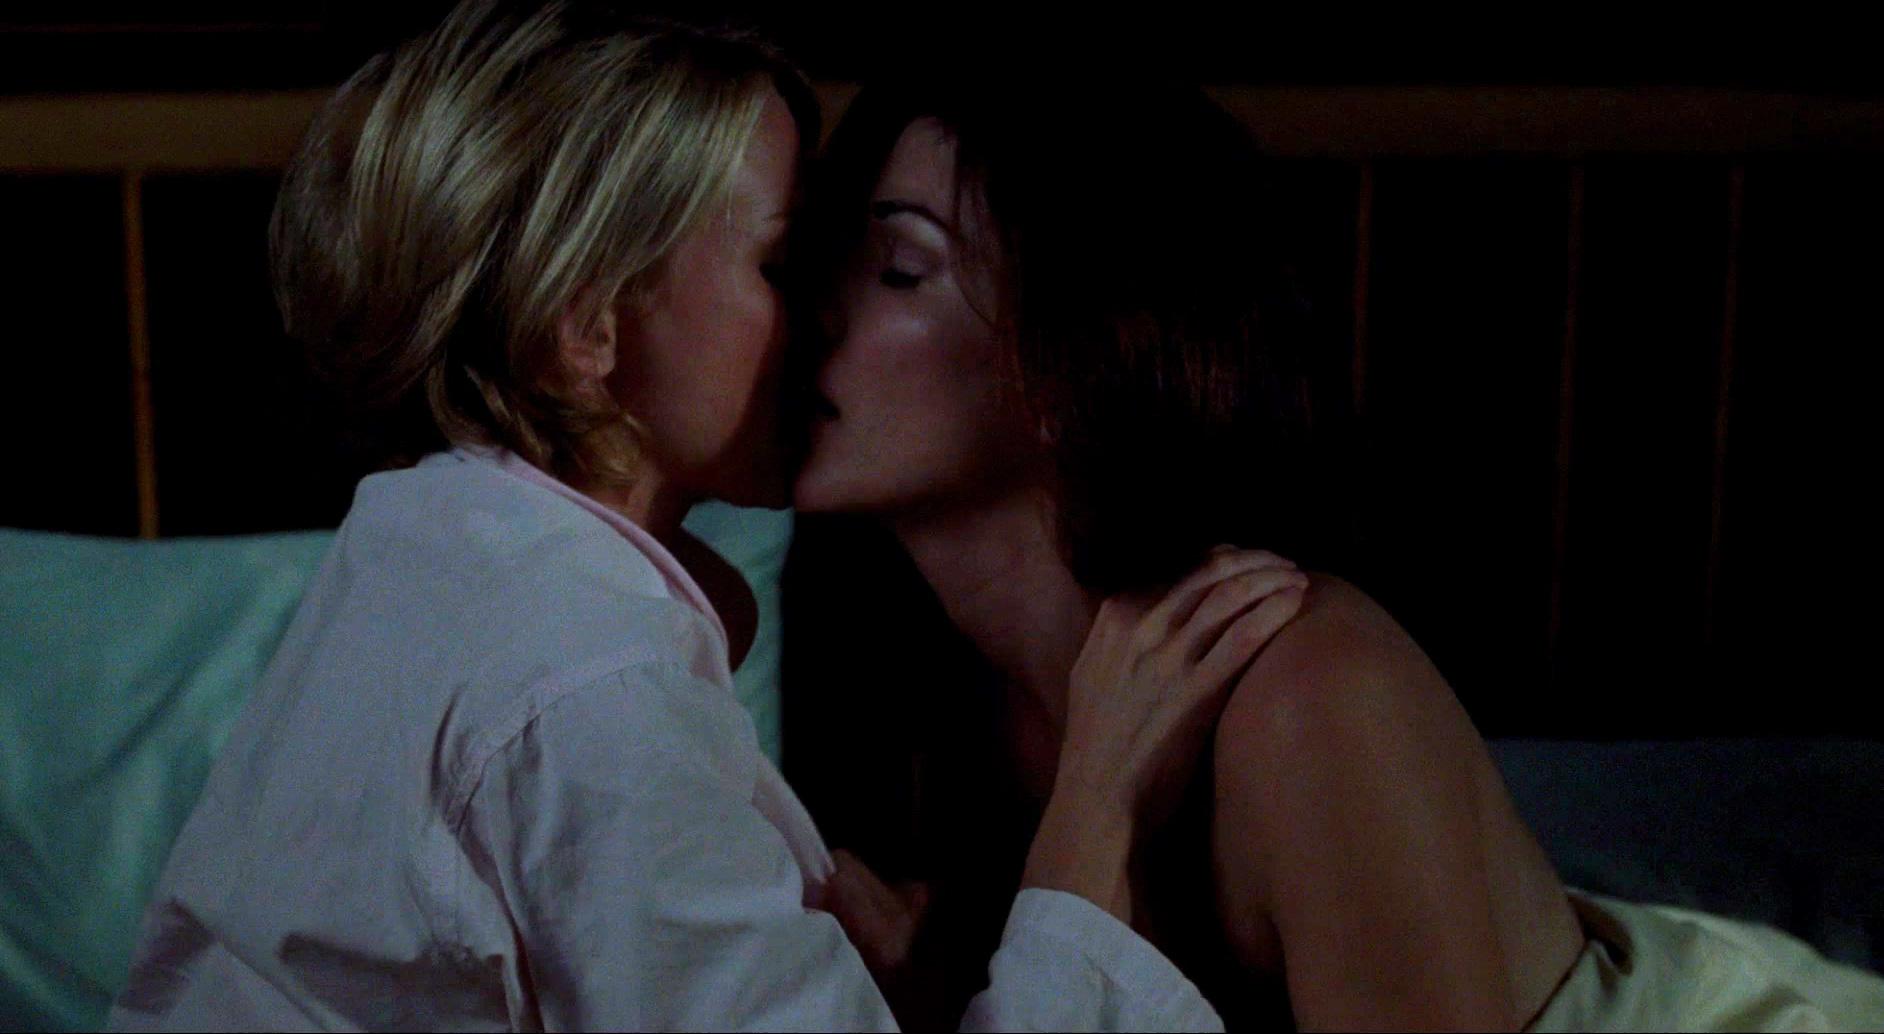 Lesbian scene romantic Lesbian movies